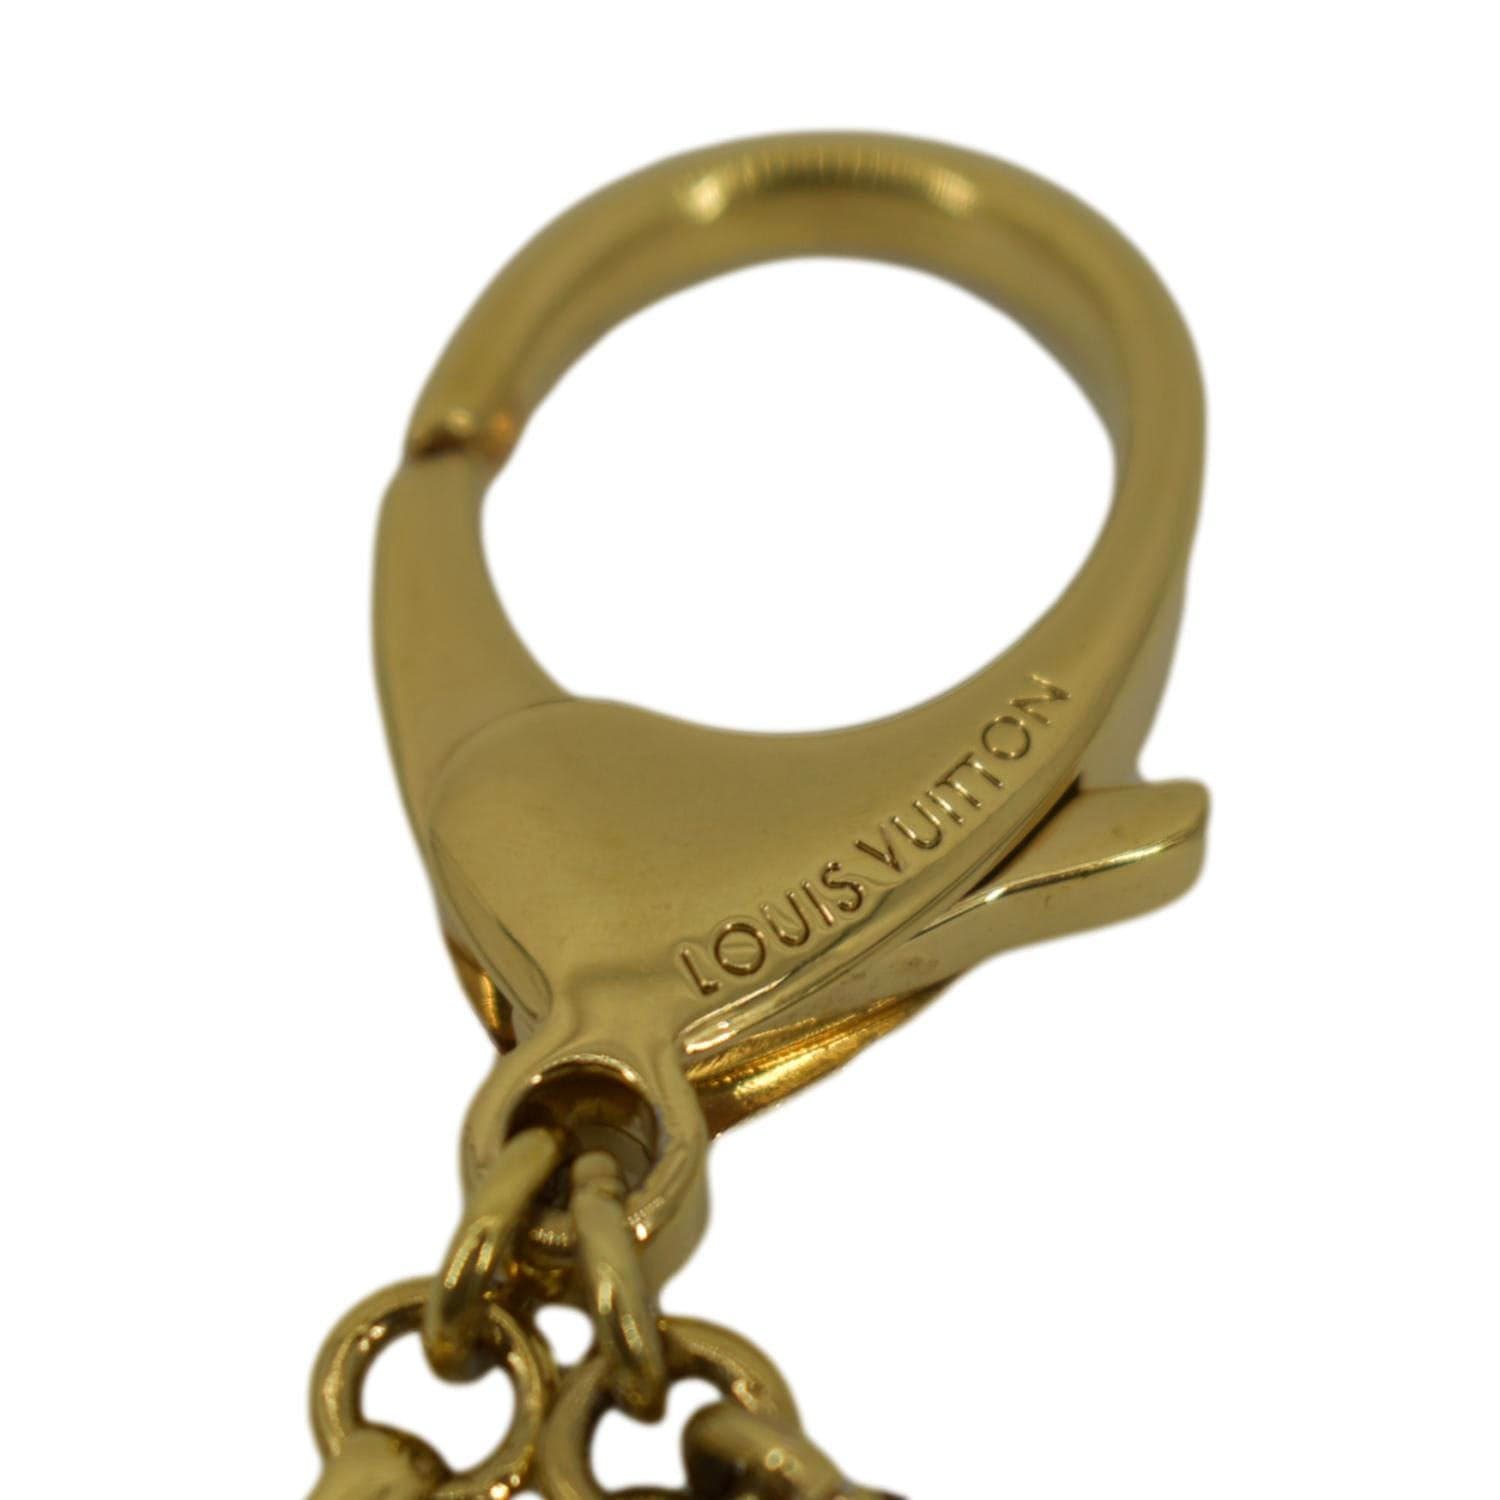 Louis Vuitton Gold Insolence Tortoise Shell Gold-Tone Key Chain - Bag Charm